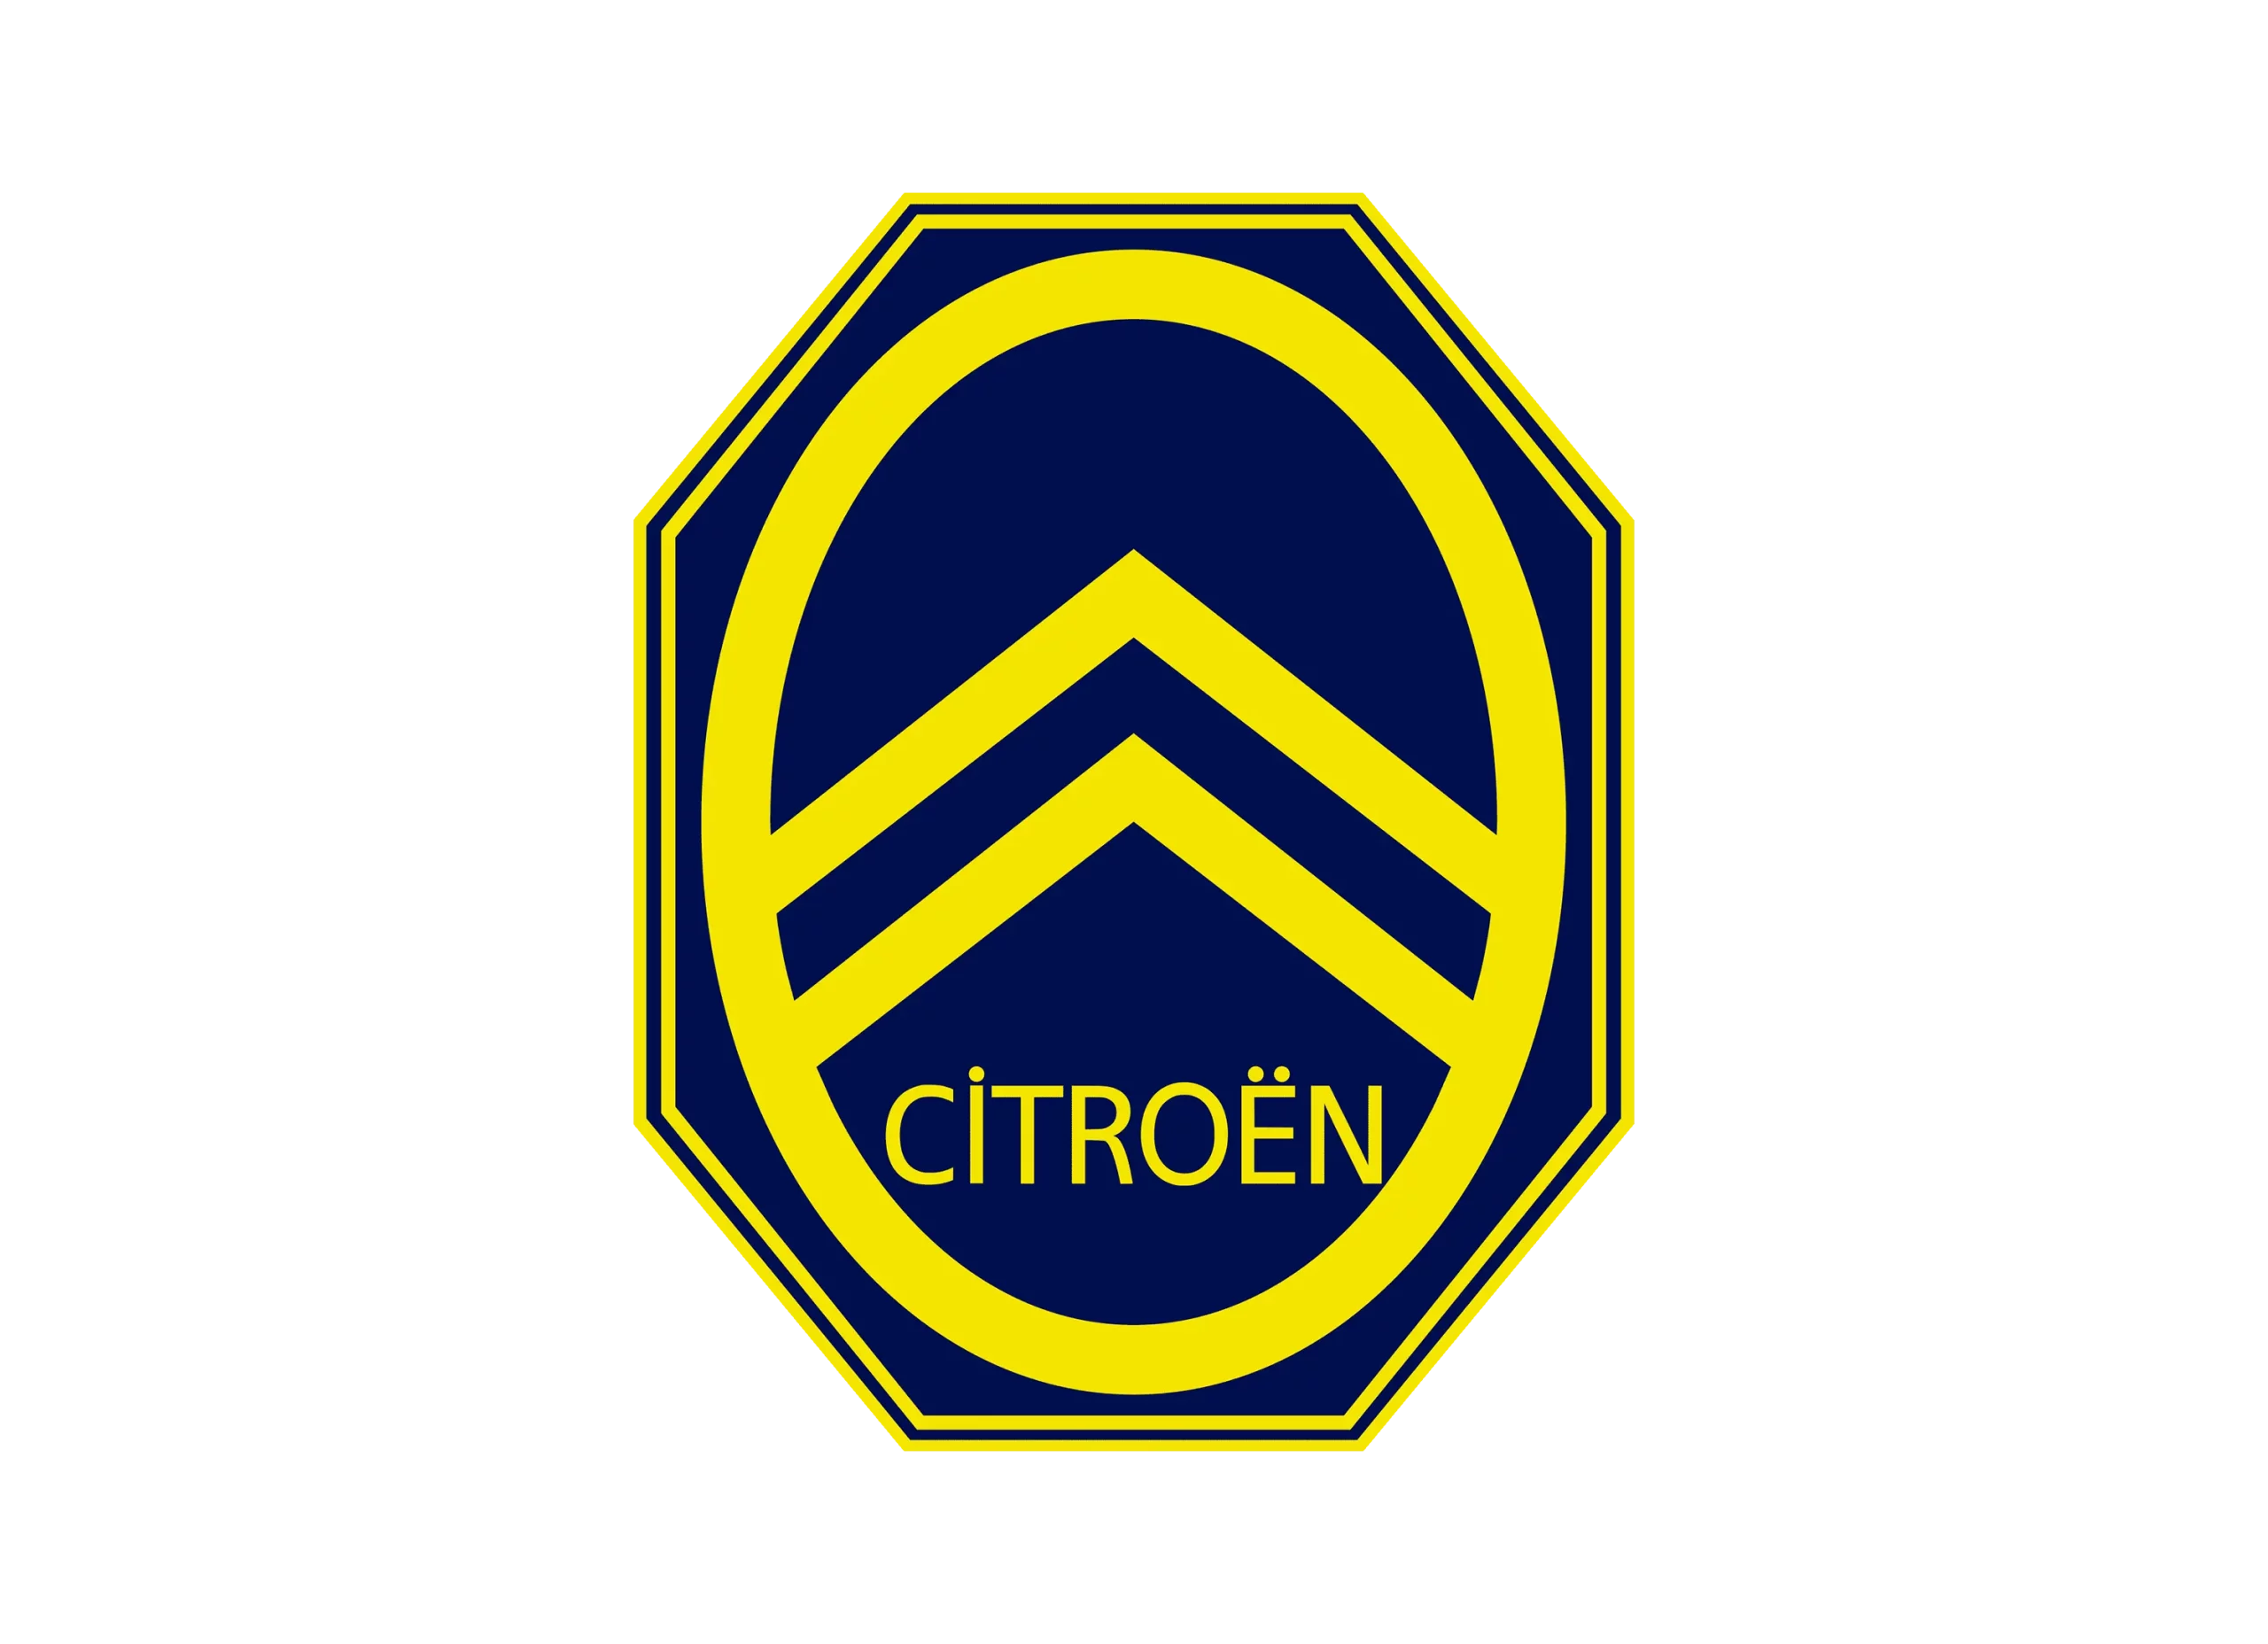 Citroen logo 1935-1959